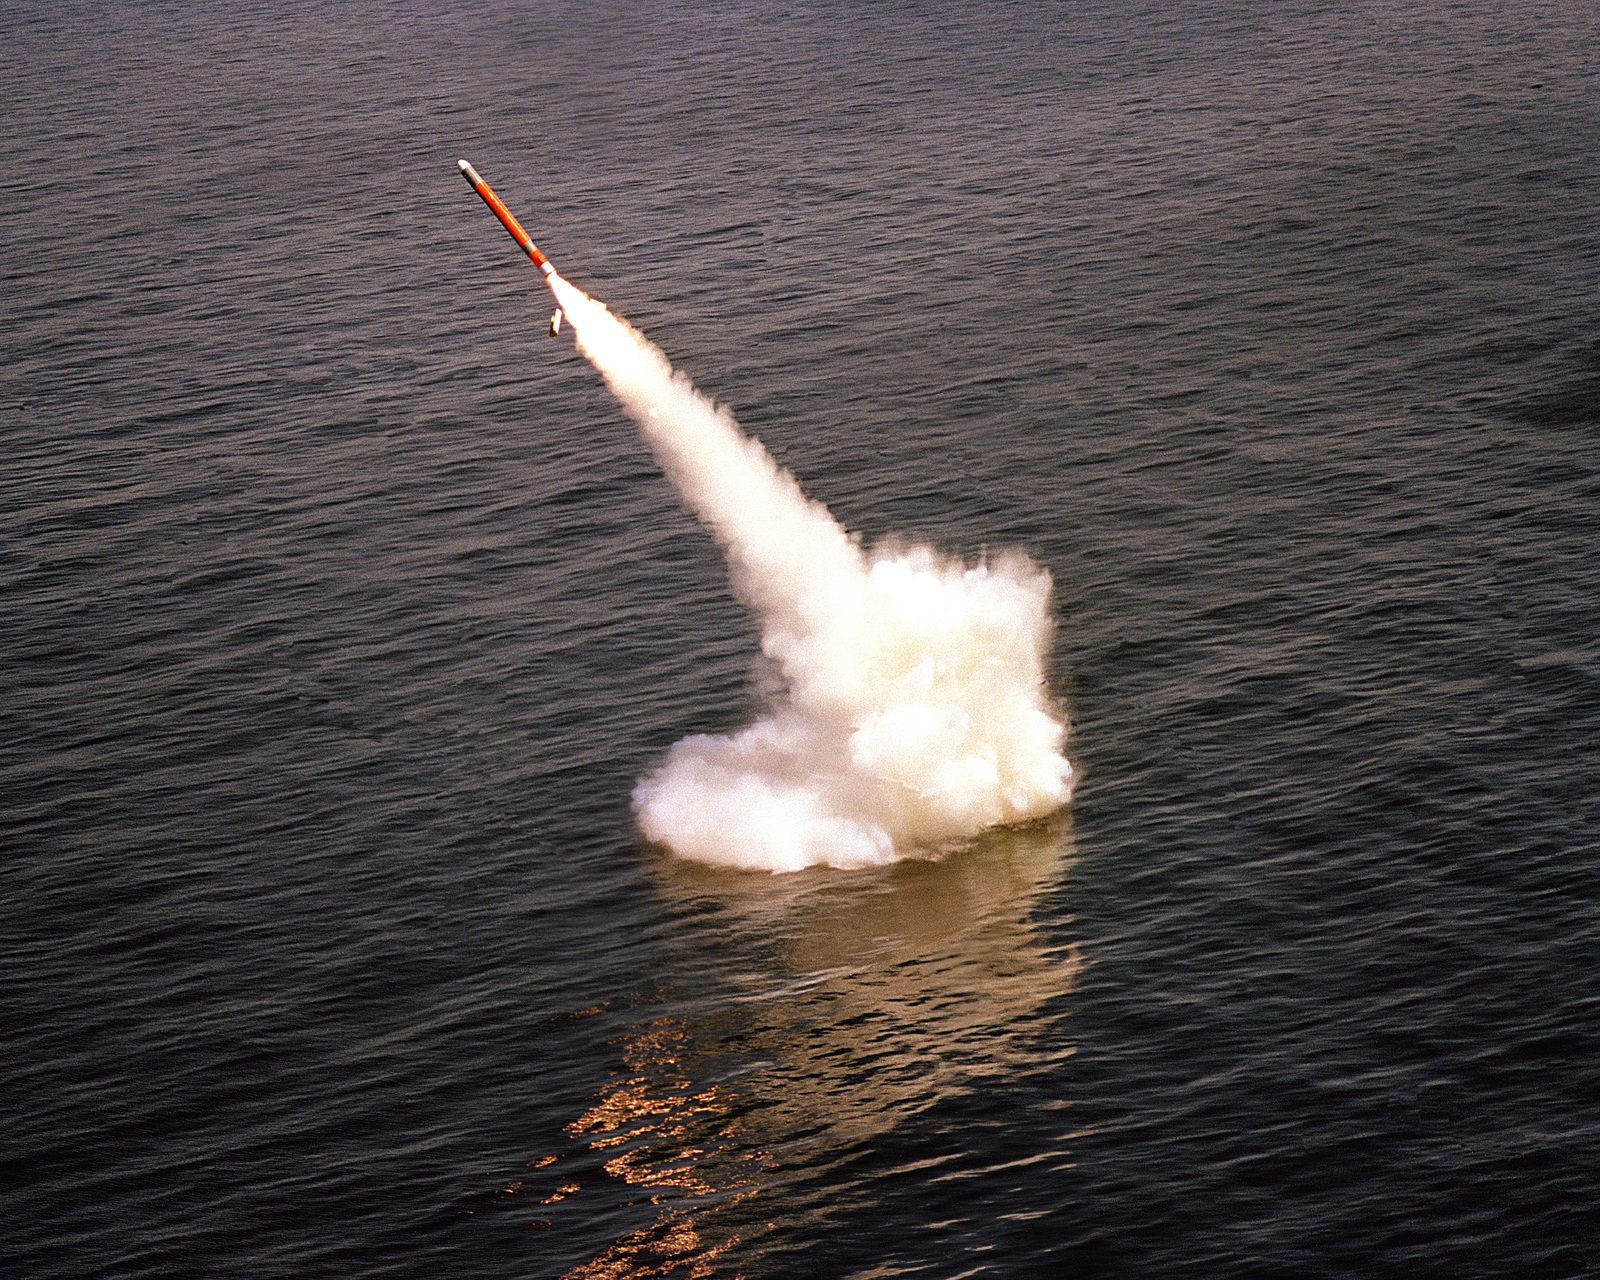 tomahawk cruise missile hitting target